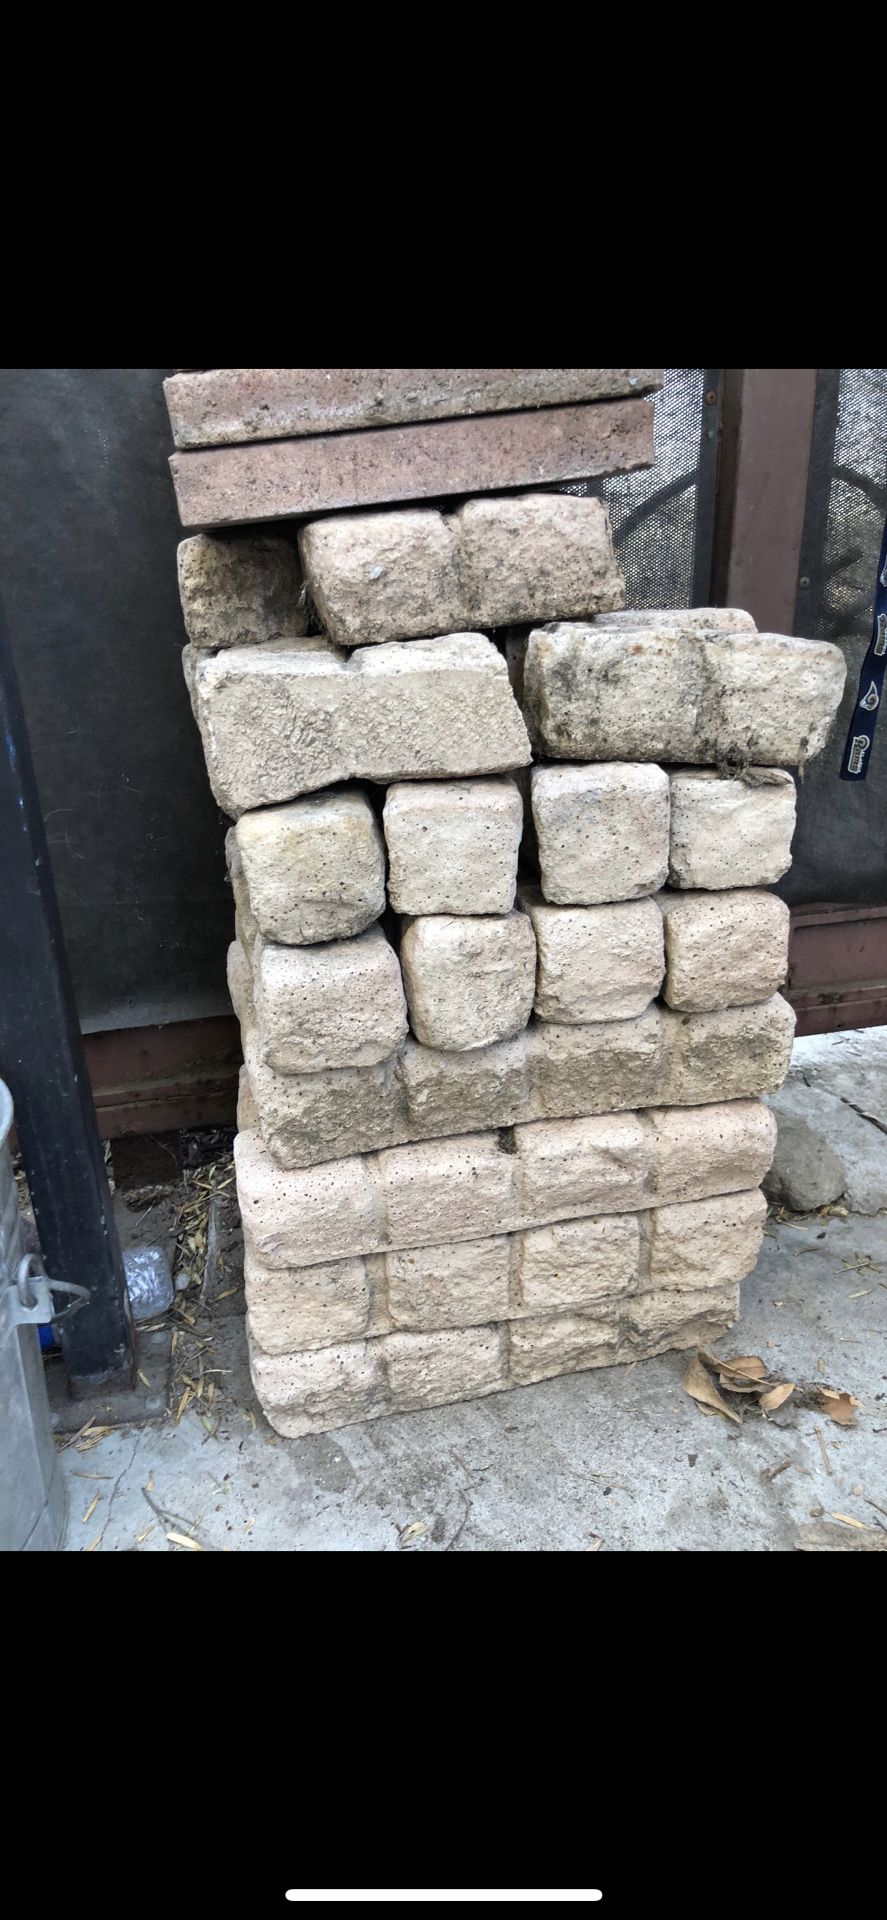 Approximately 30 bricks